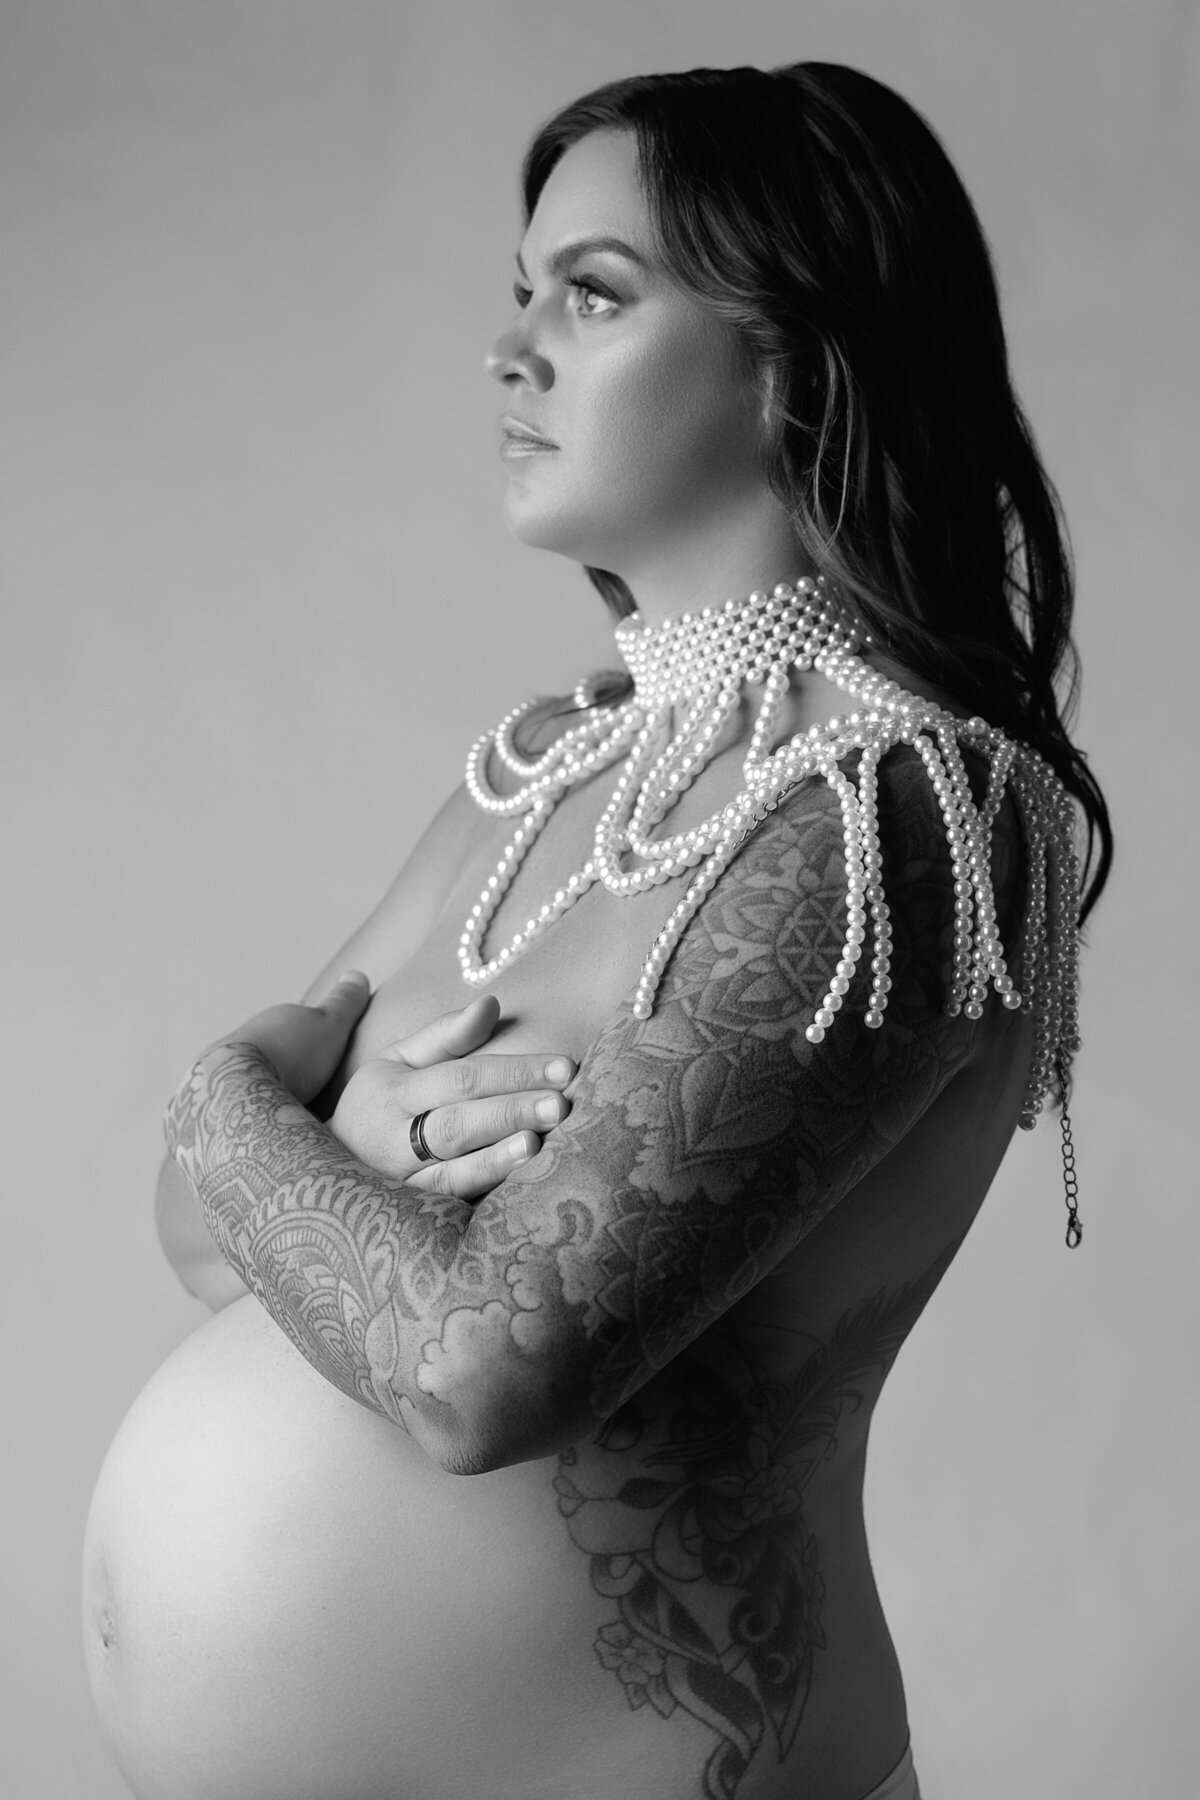 Fine art nude maternity, Sanford NC photographer, Raleigh NC maternity photography